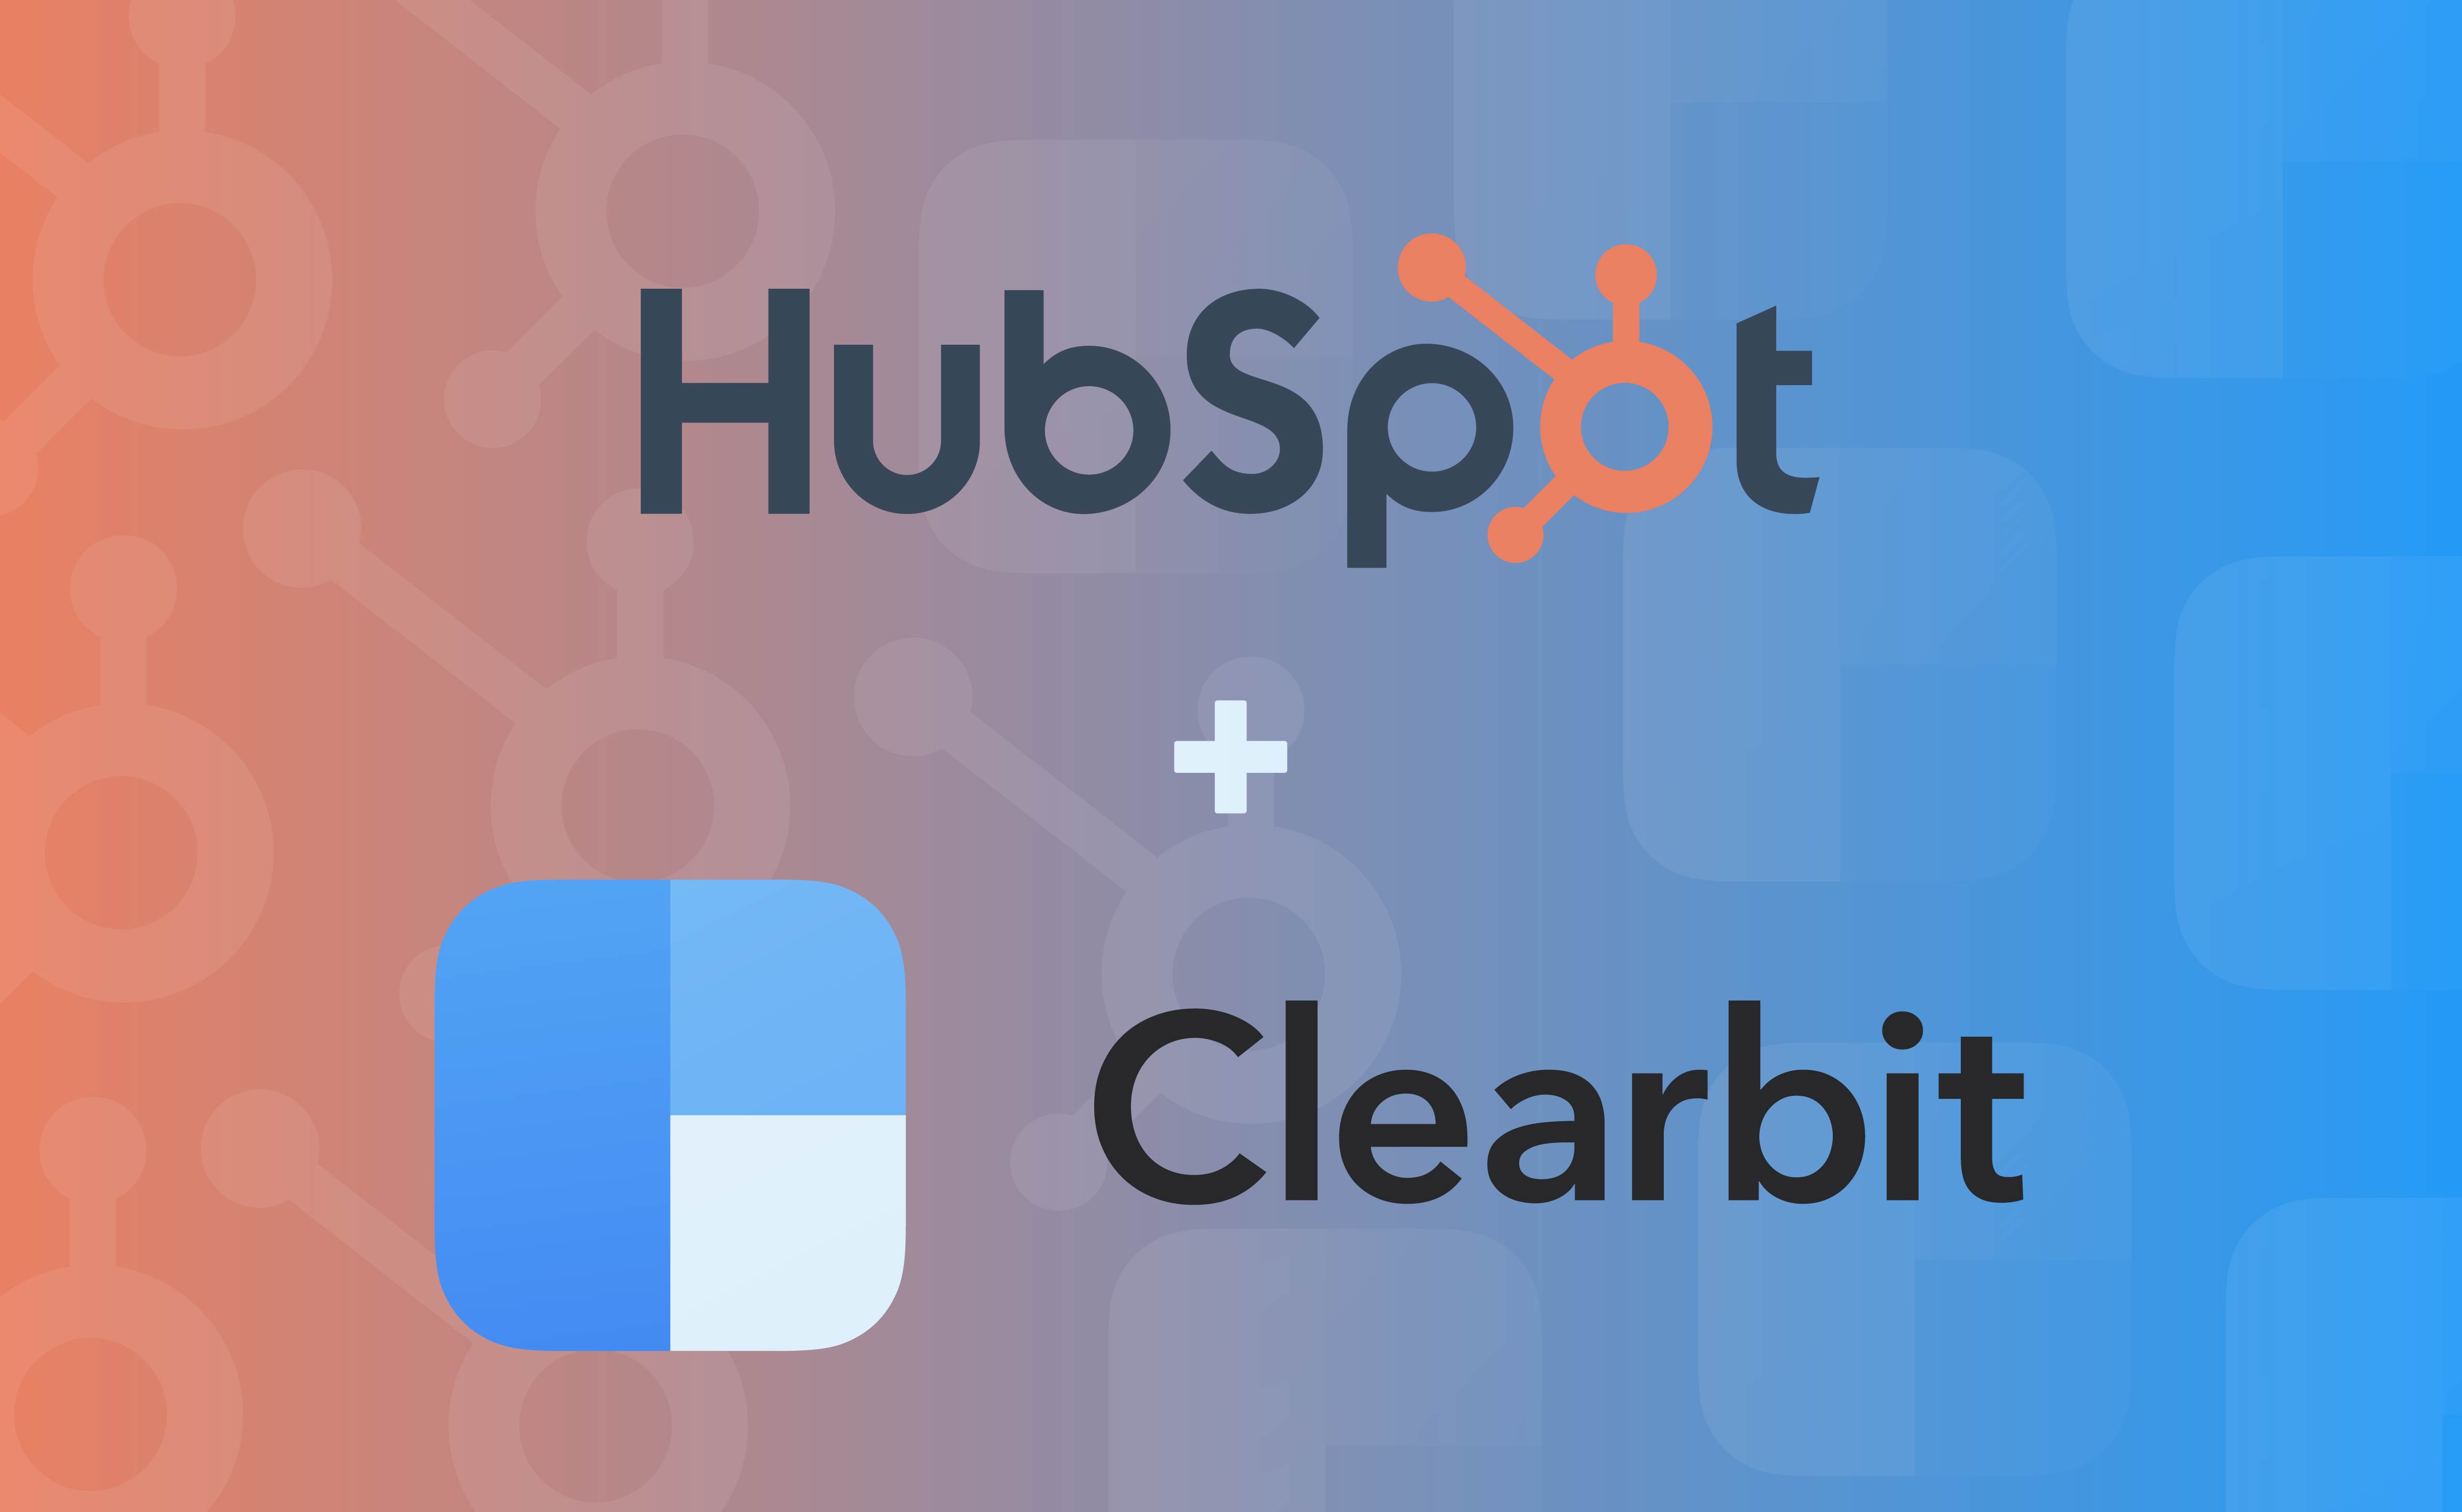 clearbit and hubspot logos